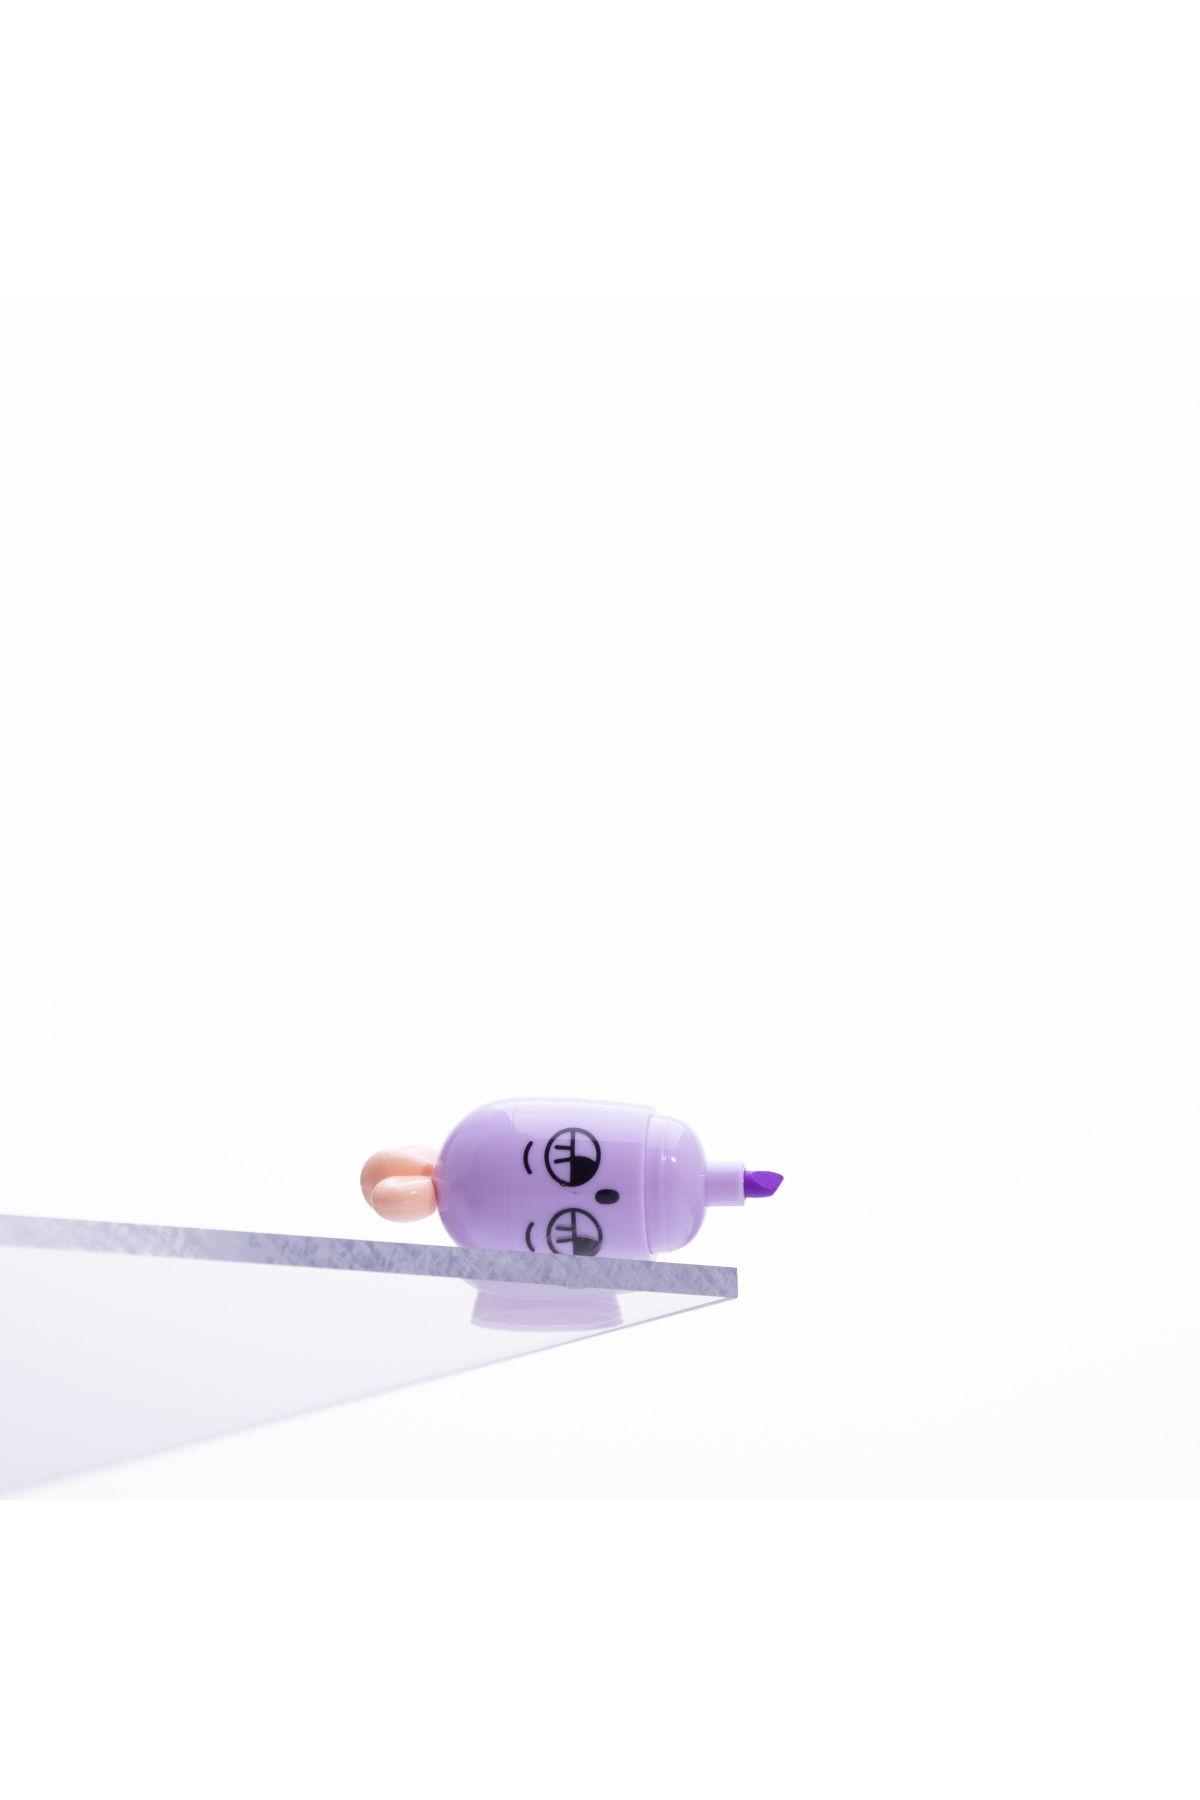 Bimotif Emoji desenli mini havuç, fosforlu kalem, Mor 1 adet